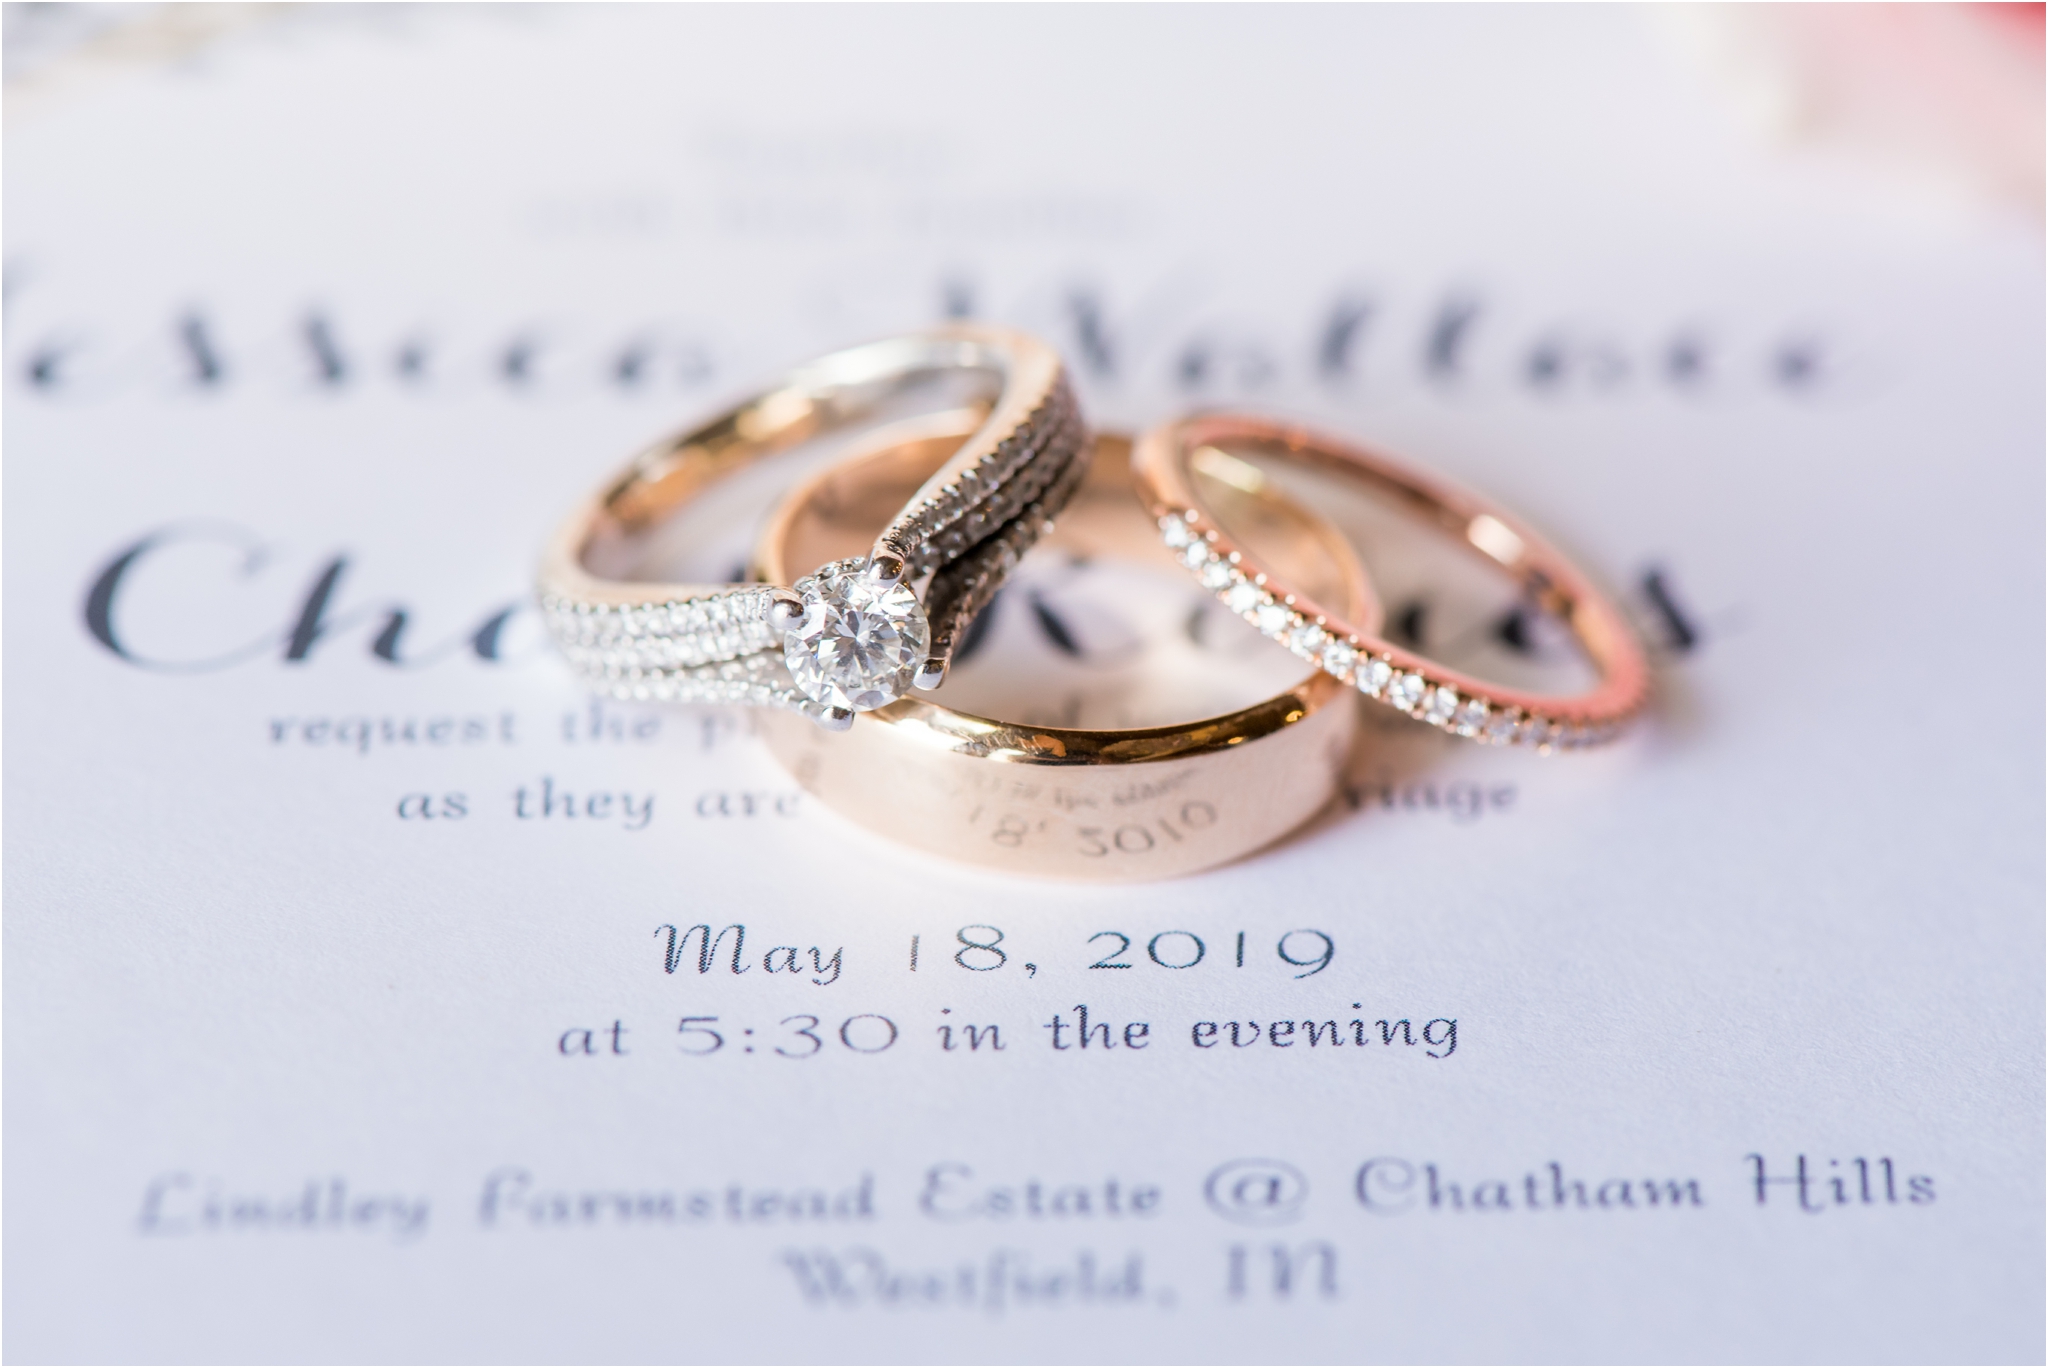 Lindley Farmstead at Chatham Hills | Sarah and Rachel Wedding Photographers | Westfield, Indiana wedding | beautiful detail photos